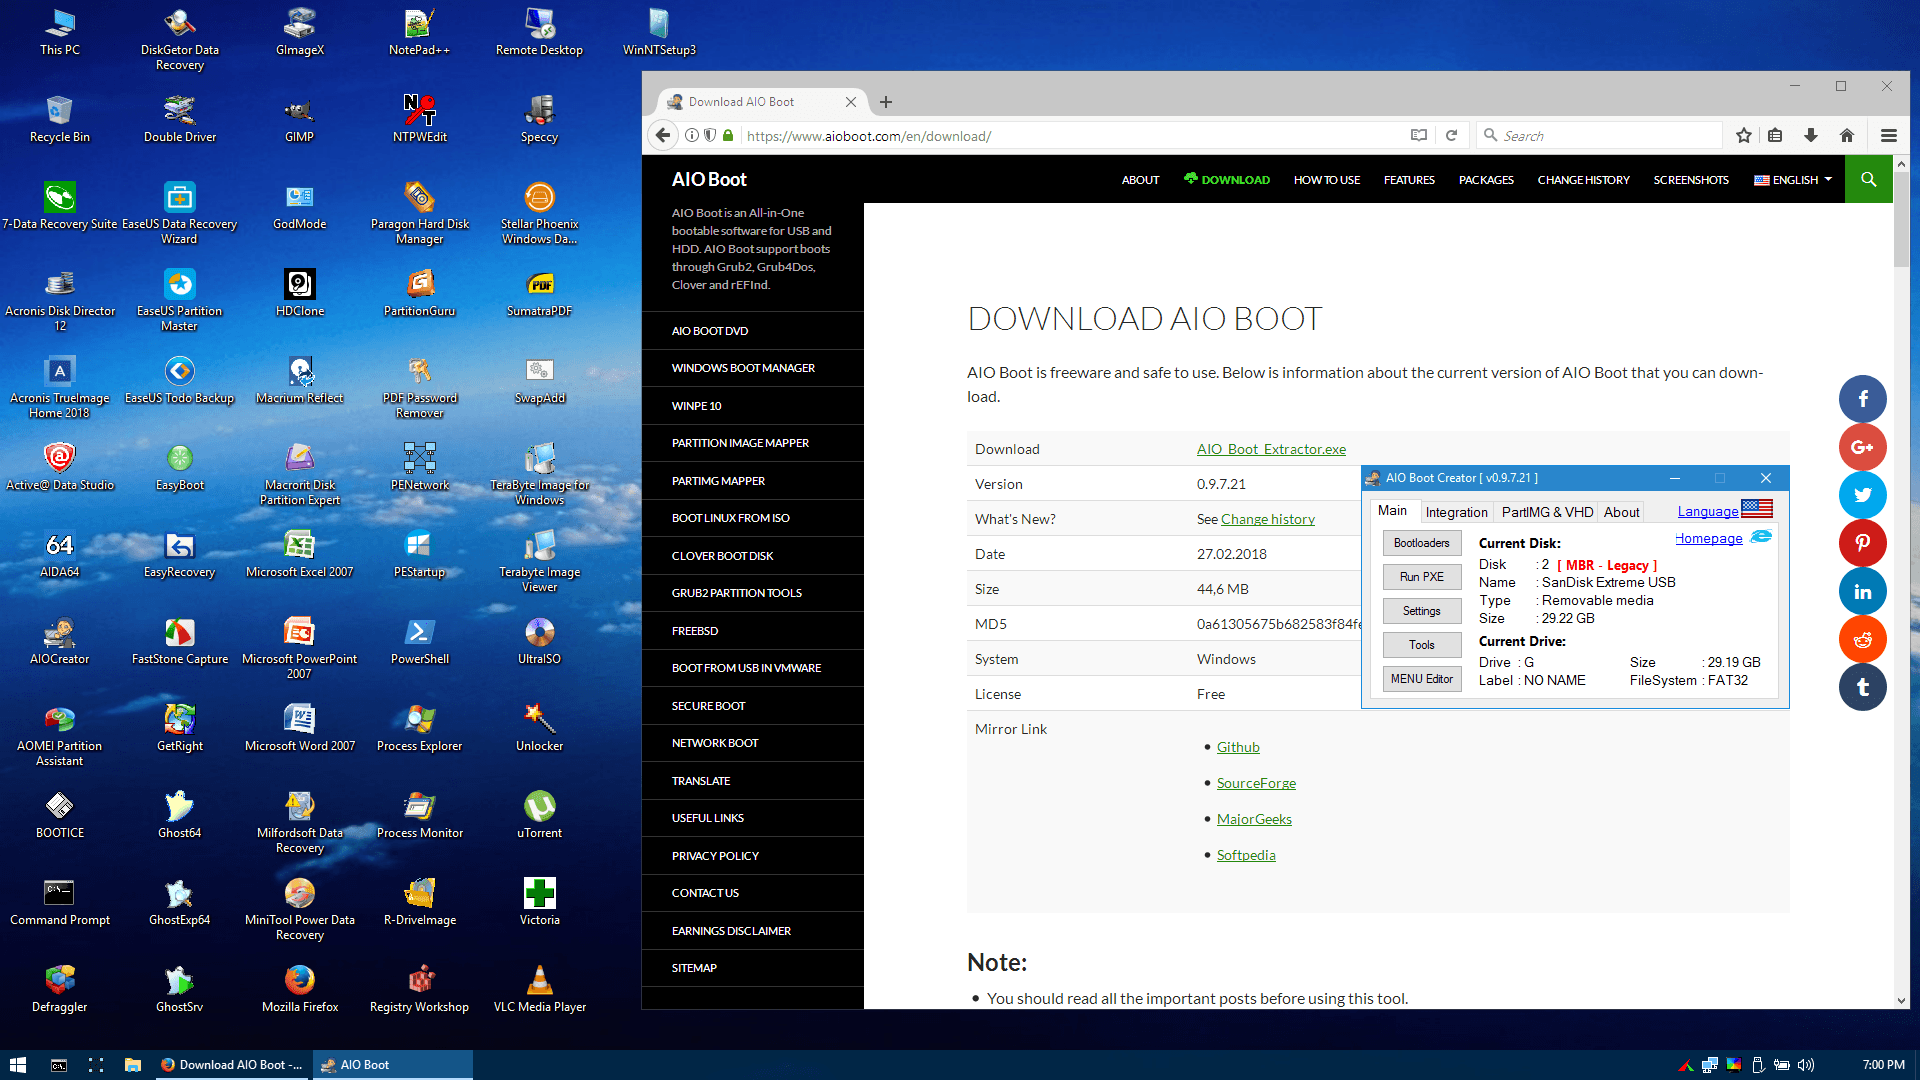 download windows 10 enterprise 64 bit full version iso 2017